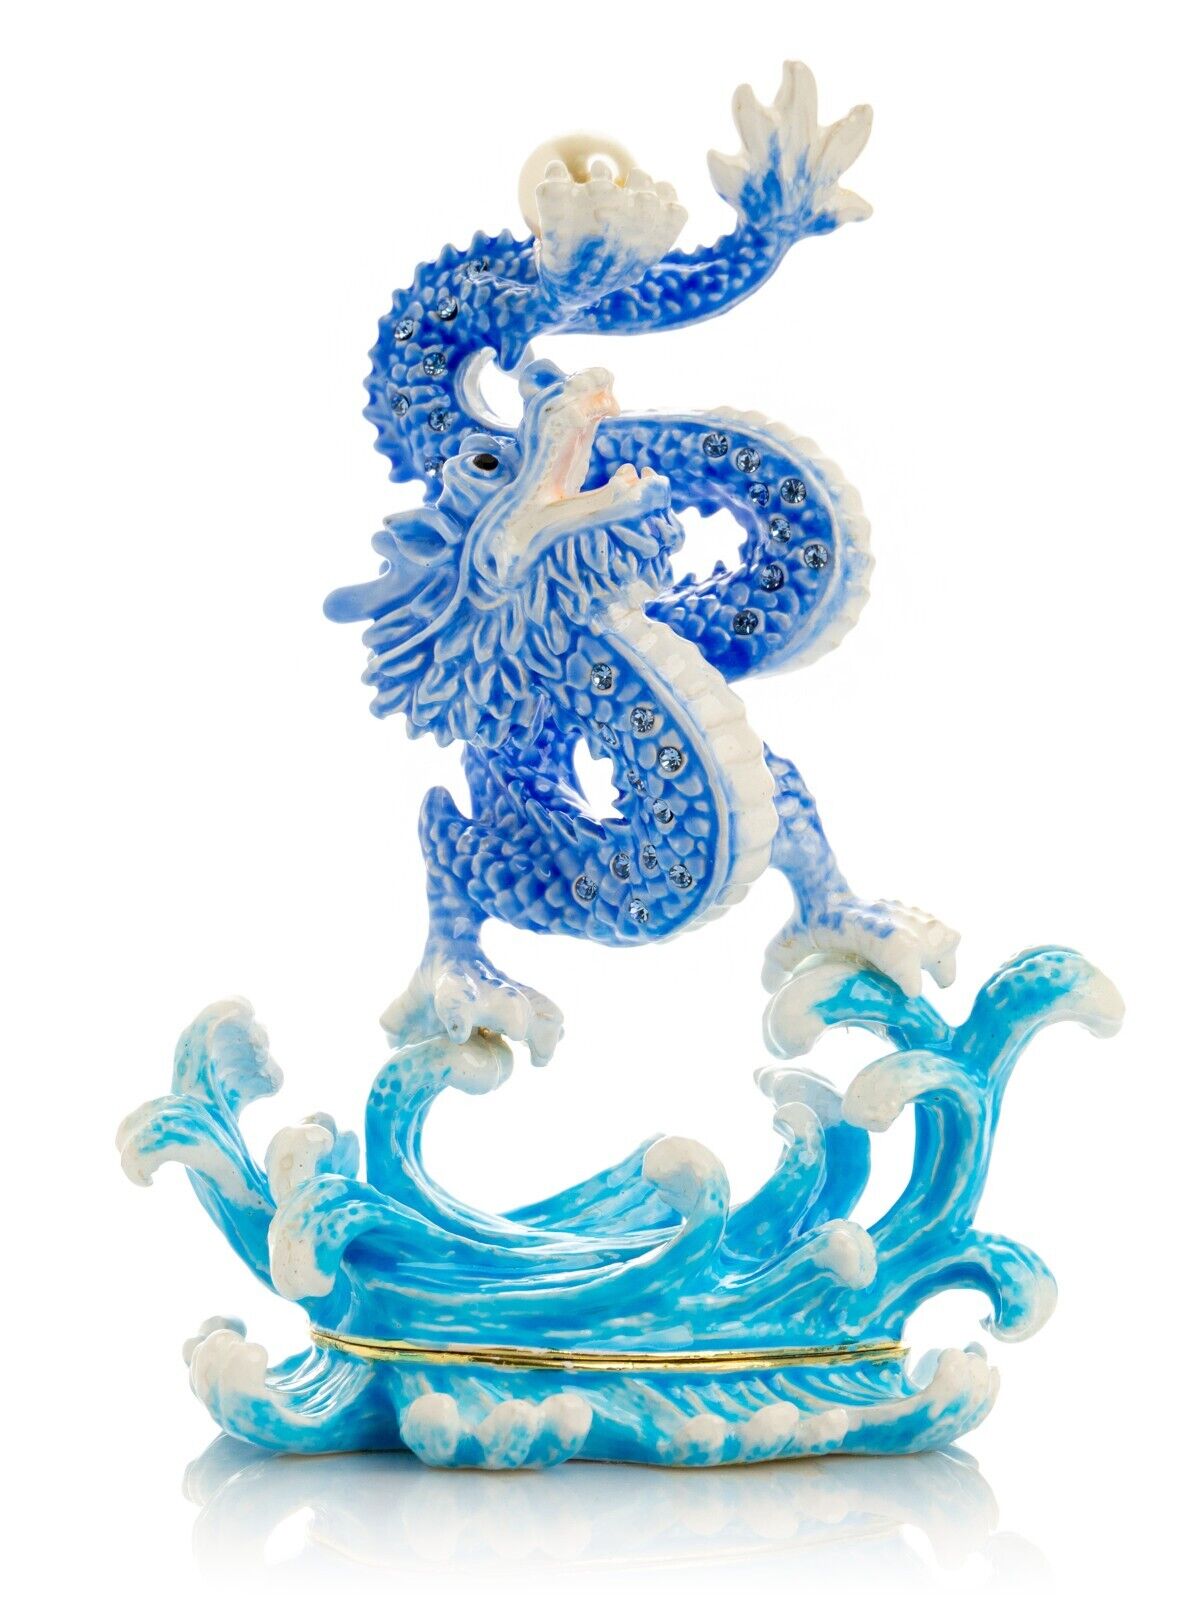 Keren Kopal Blue Dragon hand made Trinket box Decorated With Austrian Crystals